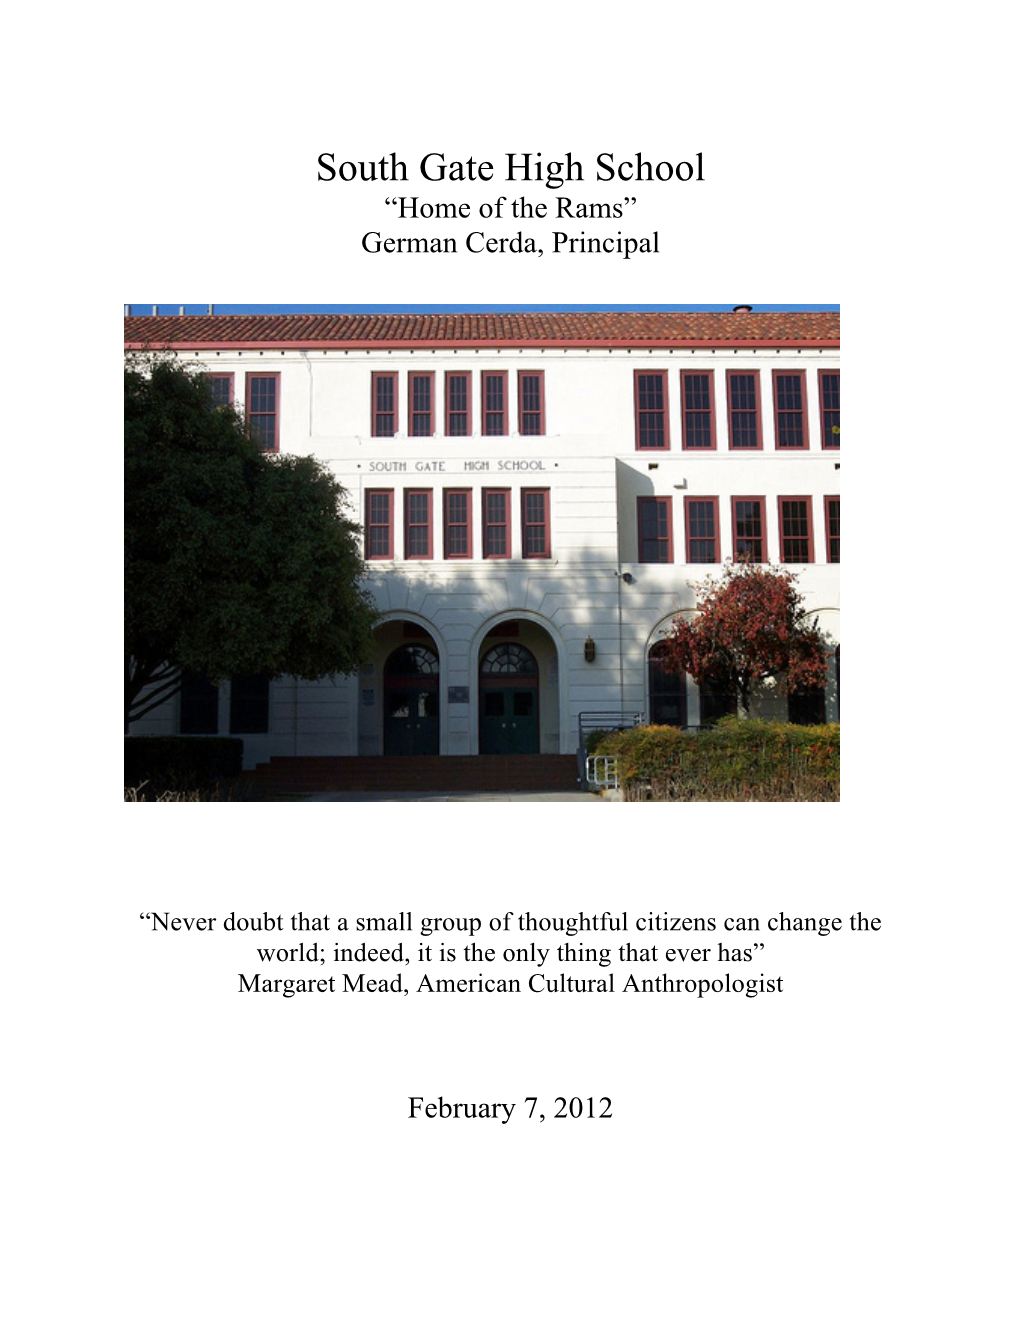 South Gate High School “Home of the Rams” German Cerda, Principal